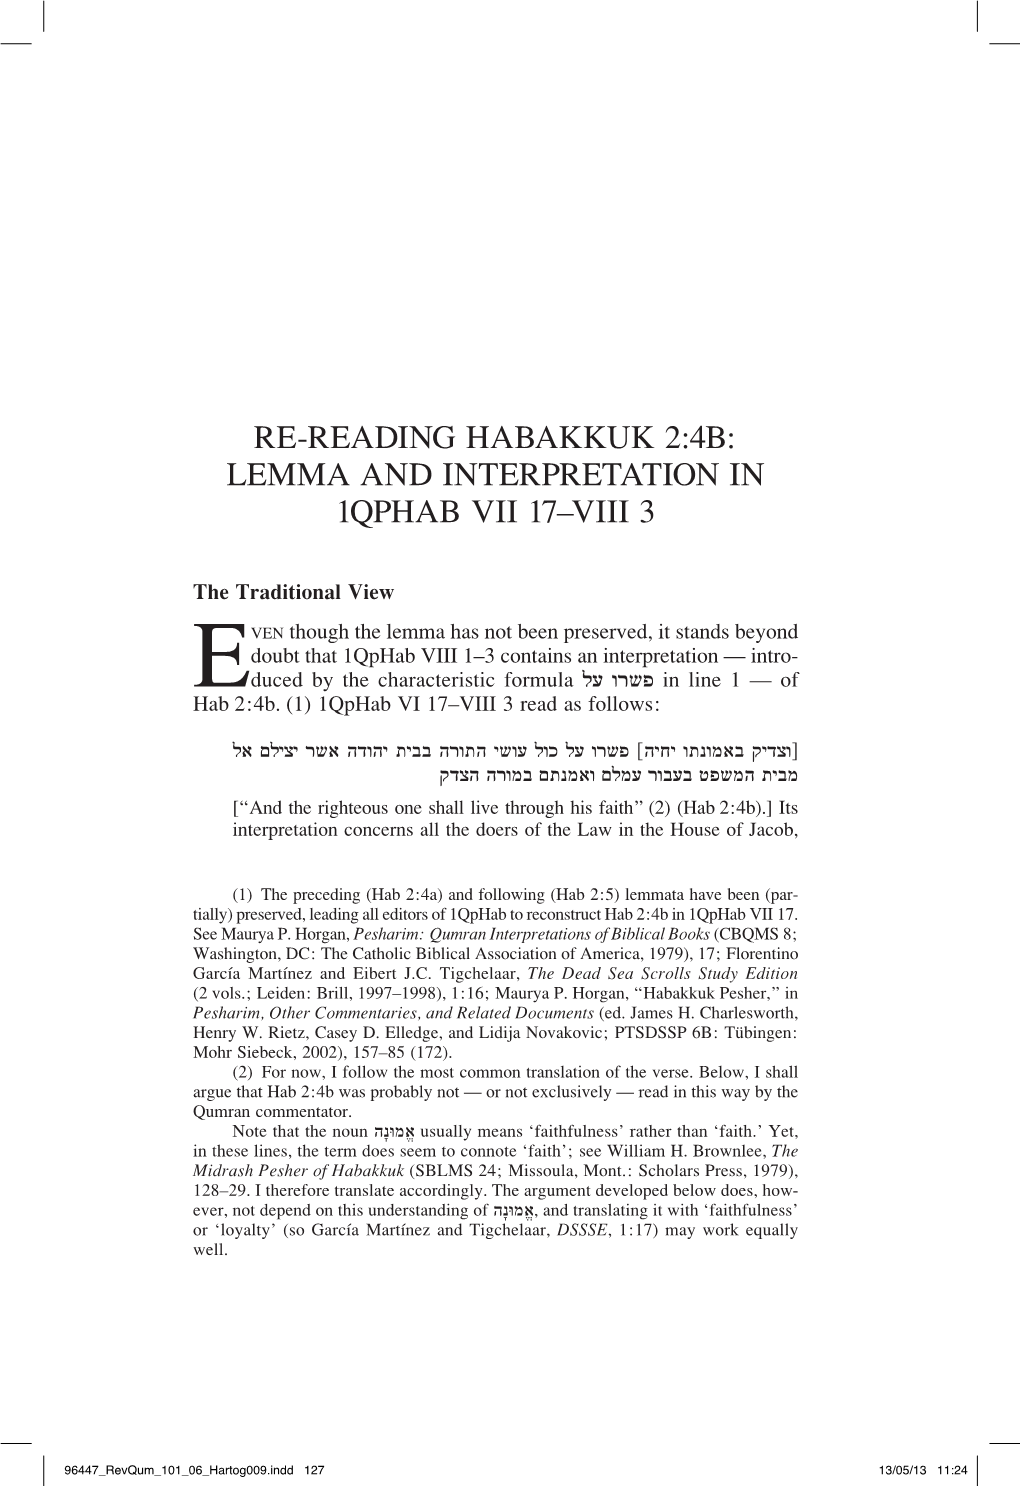 Re-Reading Habakkuk 2:4B: Lemma and Interpretation in 1Qphab VII 17–VIII 3